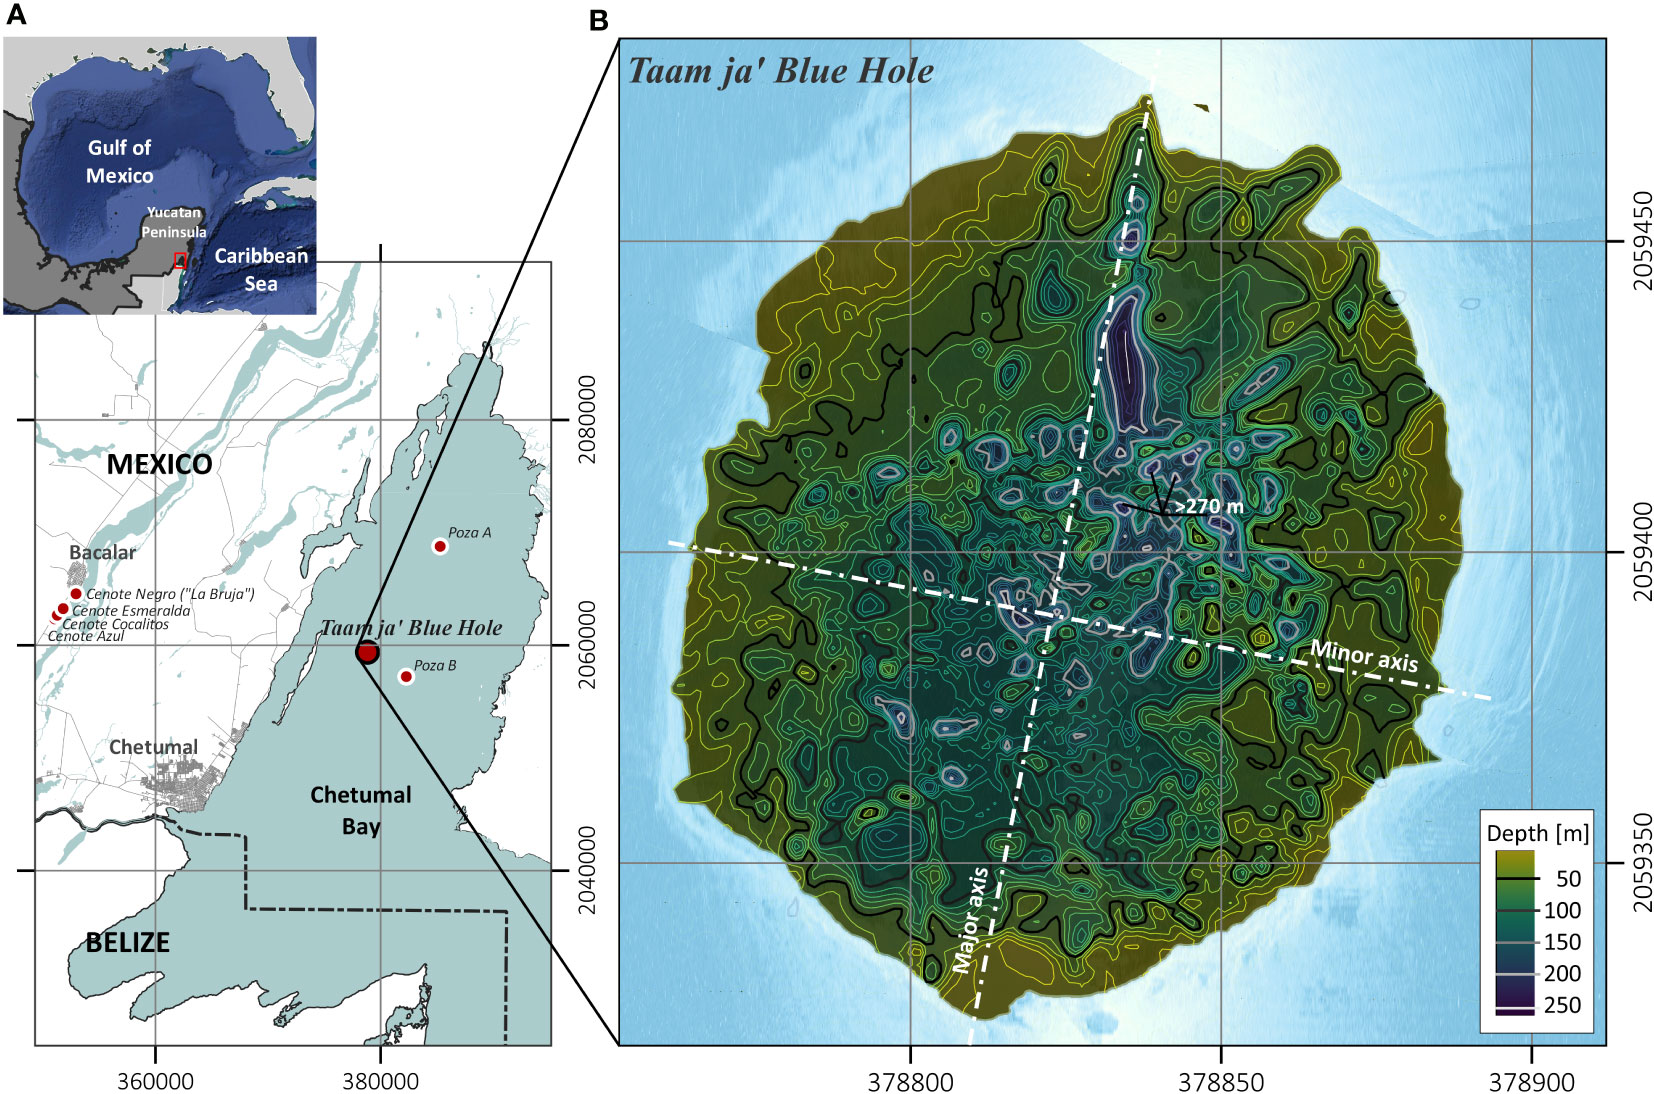 Taam ja’ Blue Hole in the Western Caribbean